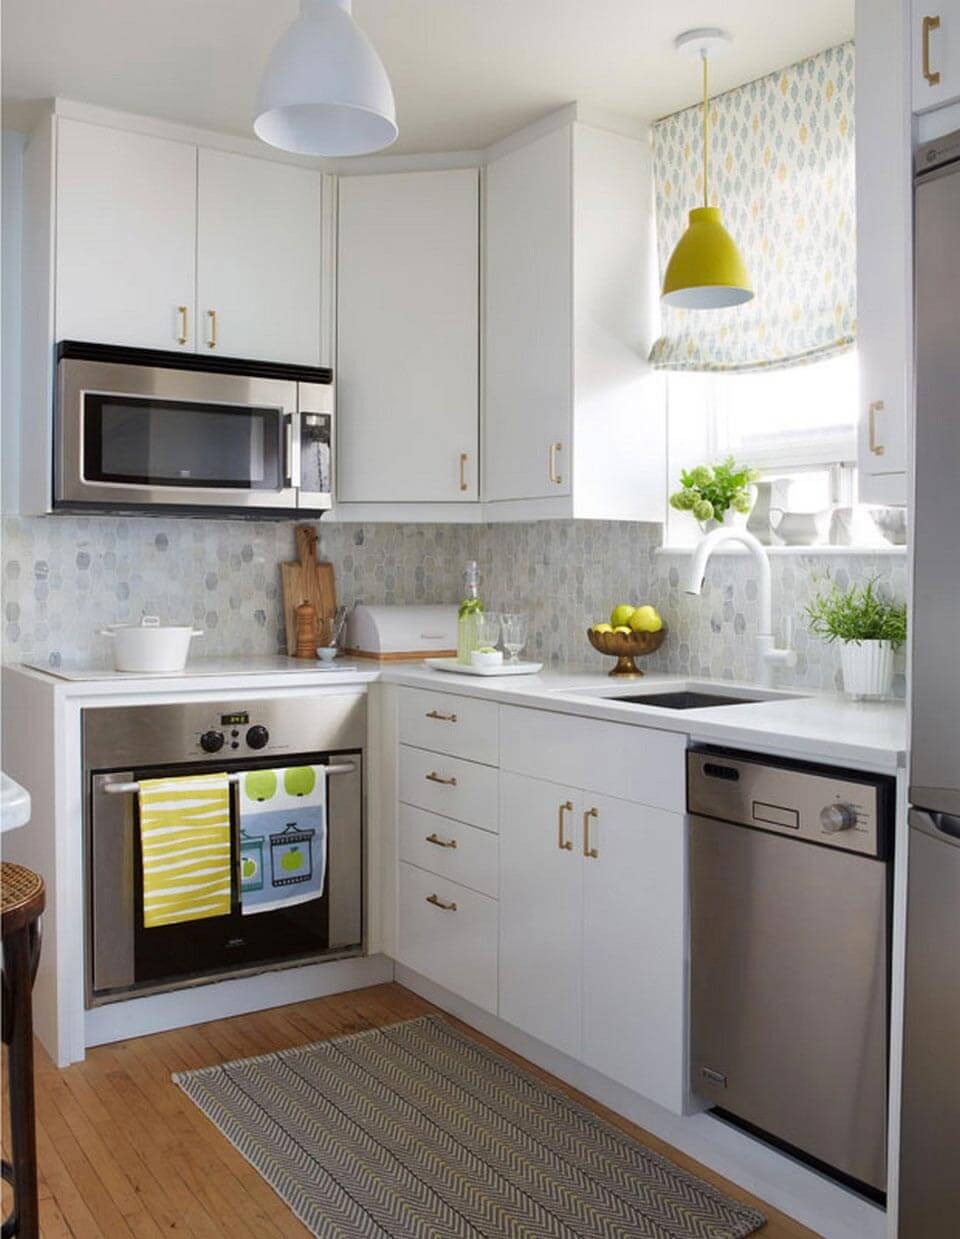 Small Kitchen Design Ideas
 30 Best Small Kitchen Decor and Design Ideas for 2020